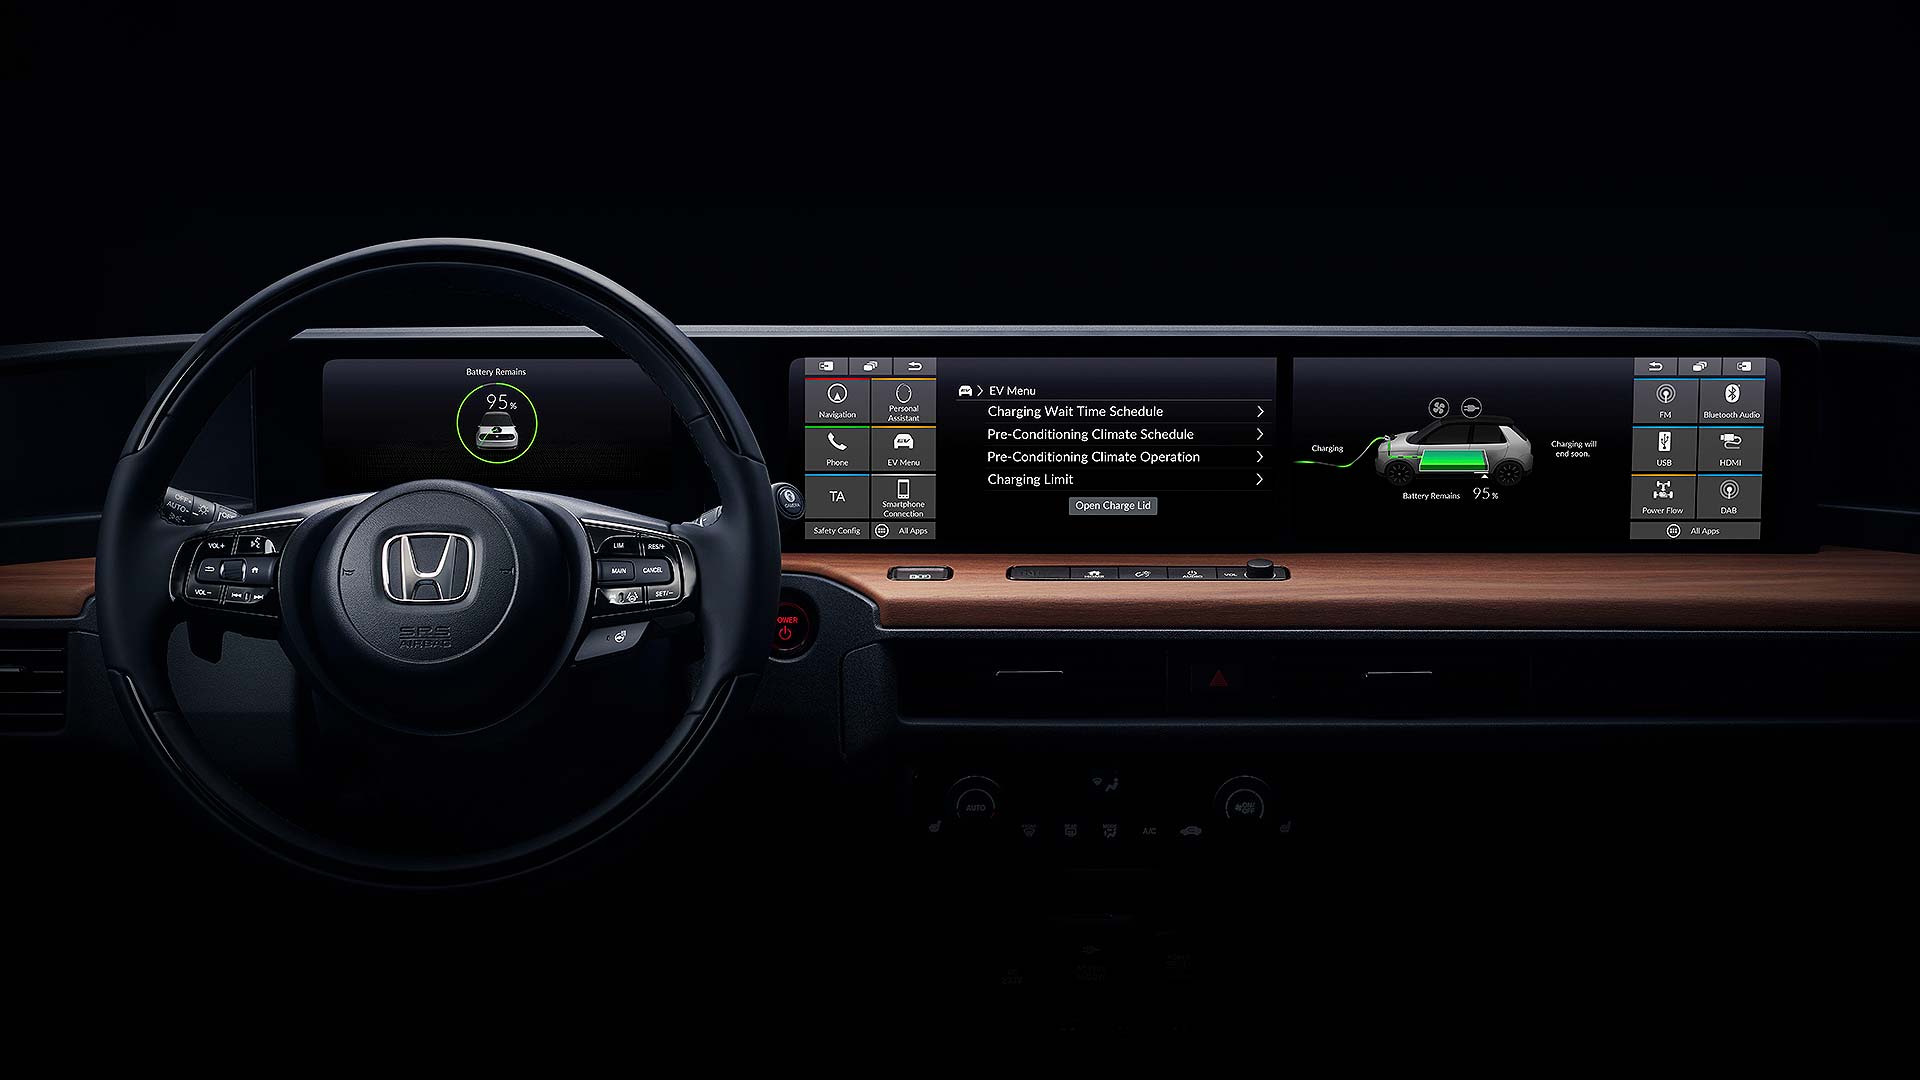 Honda Electric Vehicle Concept interior